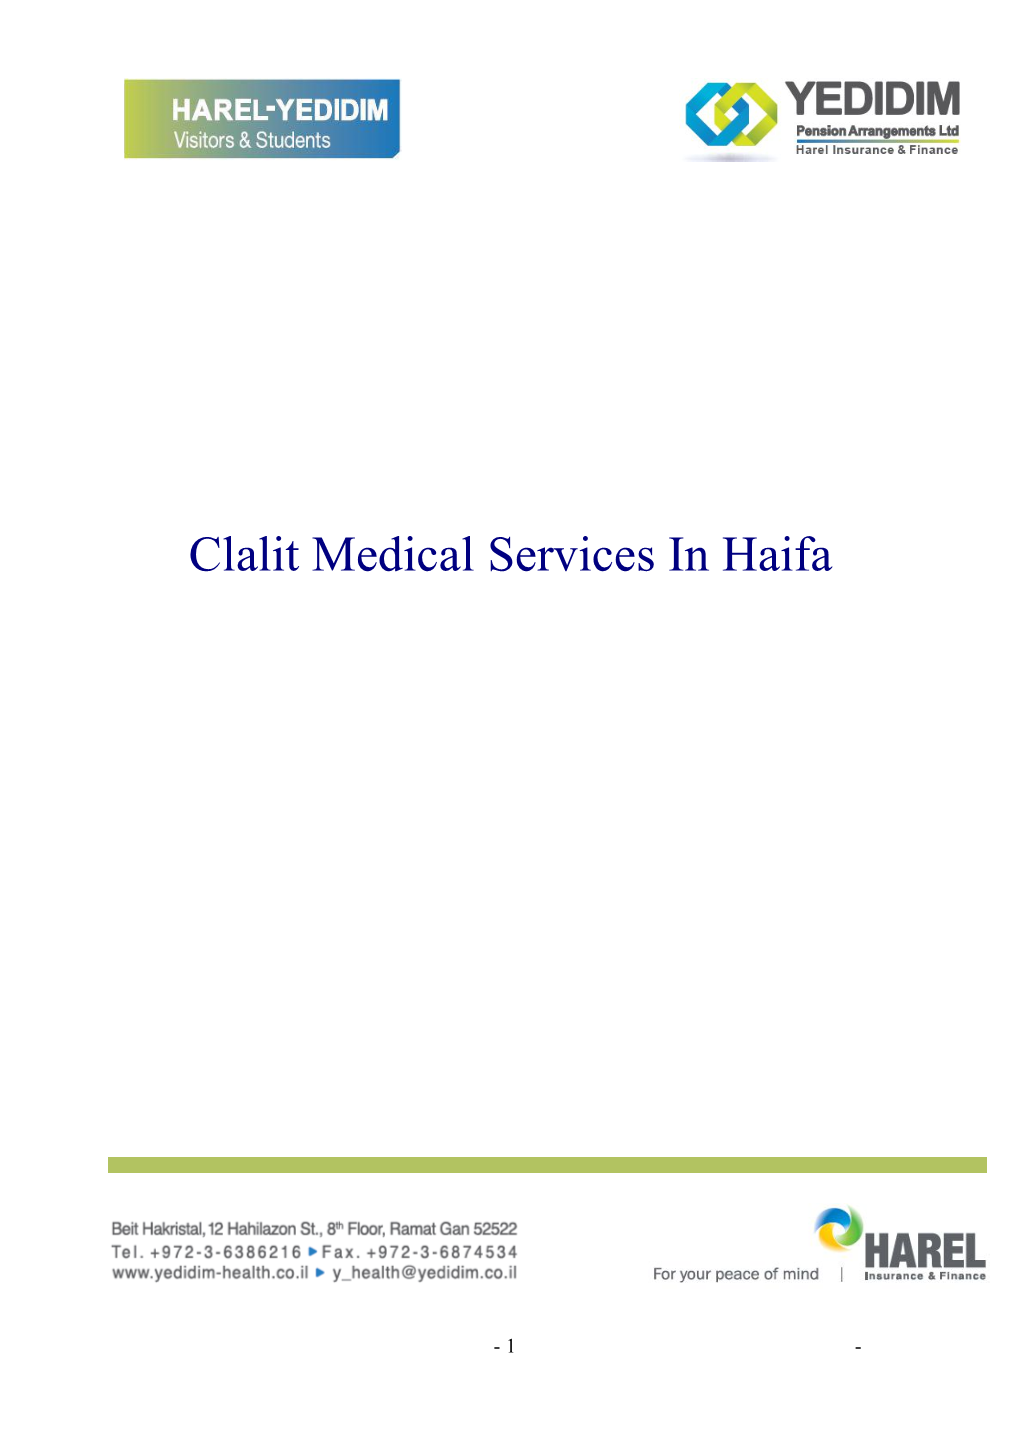 Clalit Medical Services in Haifa